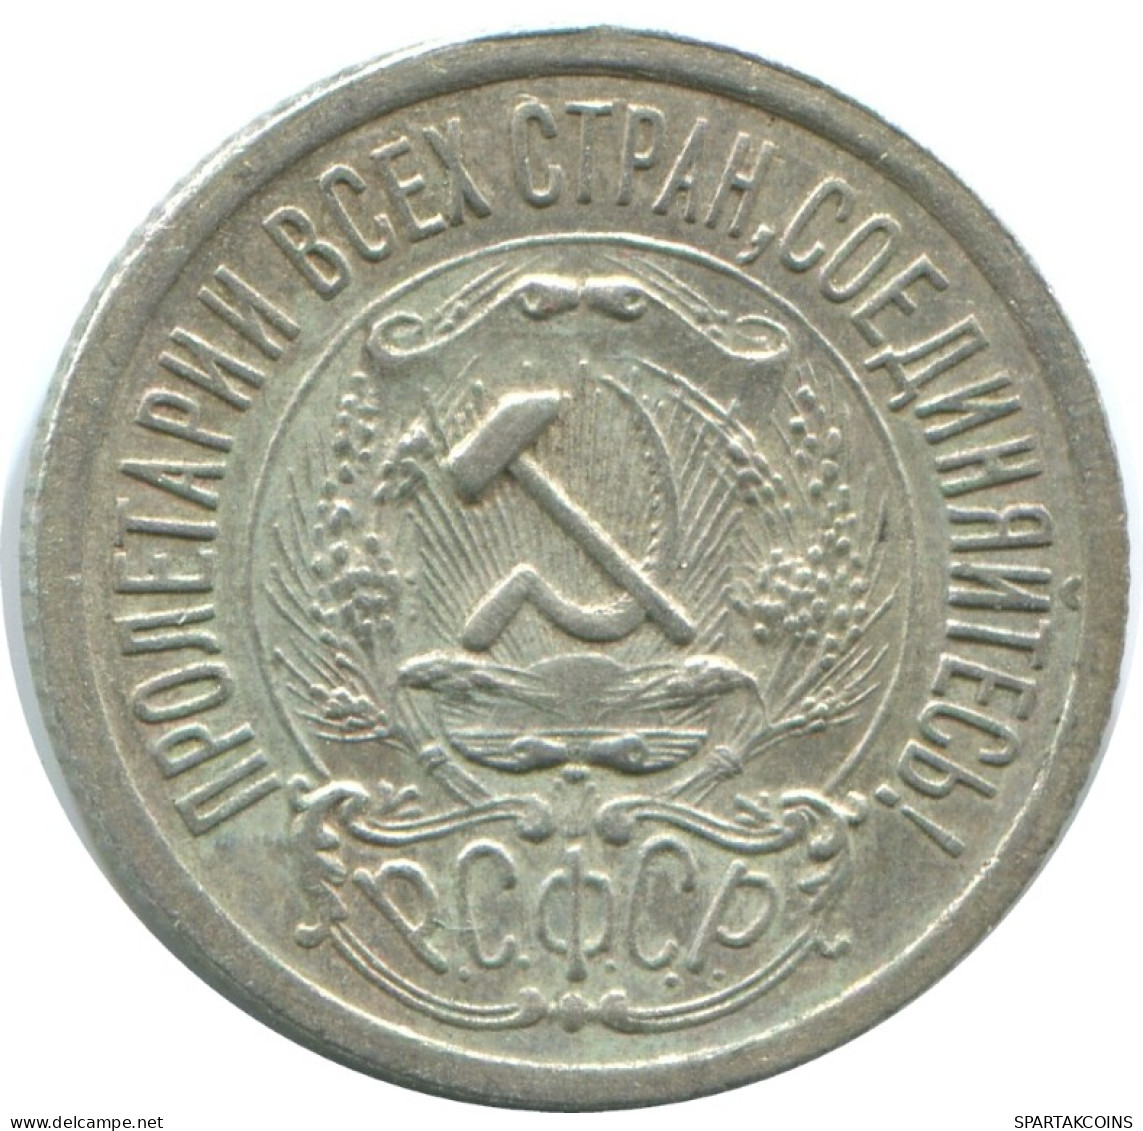 15 KOPEKS 1923 RUSSLAND RUSSIA RSFSR SILBER Münze HIGH GRADE #AF143.4.D.A - Russie